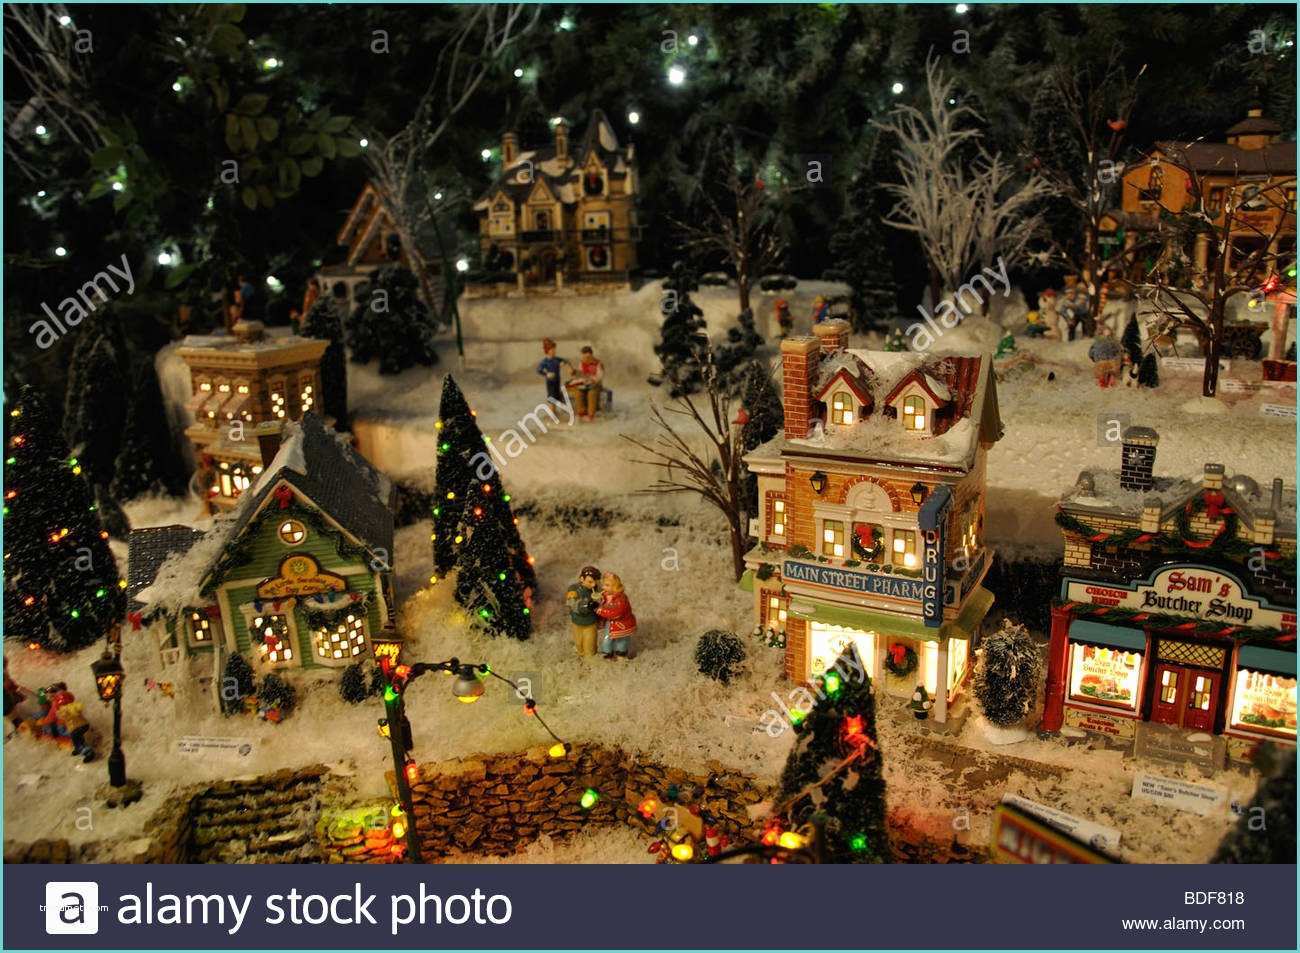 Decoration Village Noel Miniature Miniature Christmas Village toy Houses Decorations Stock